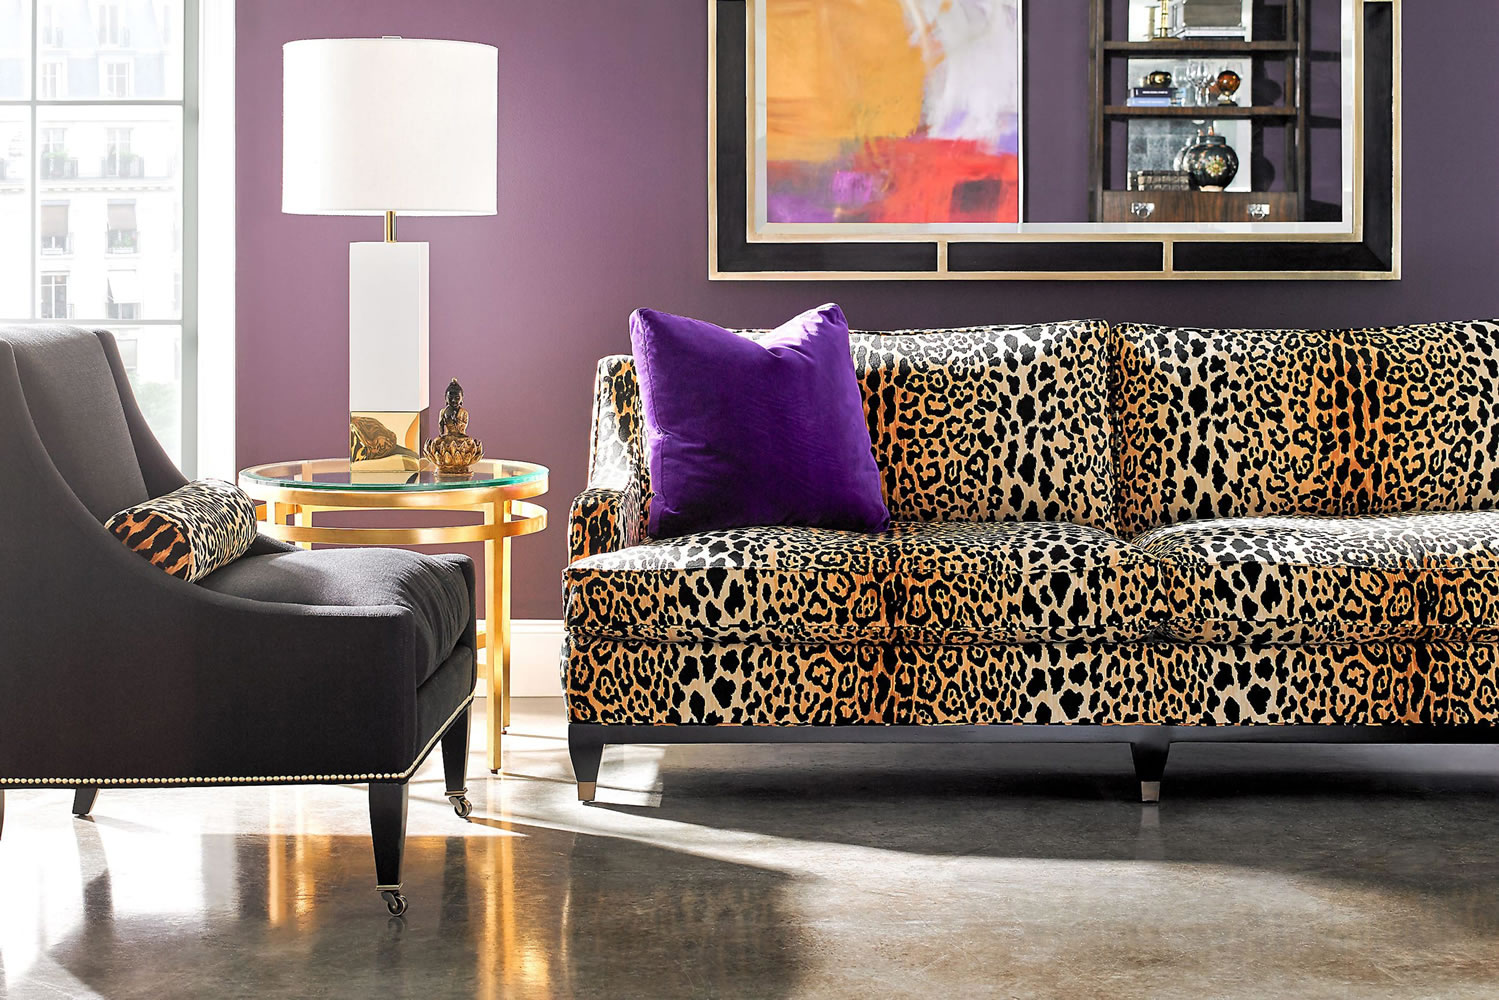 Leopard prints leap back into home decor - The Columbian